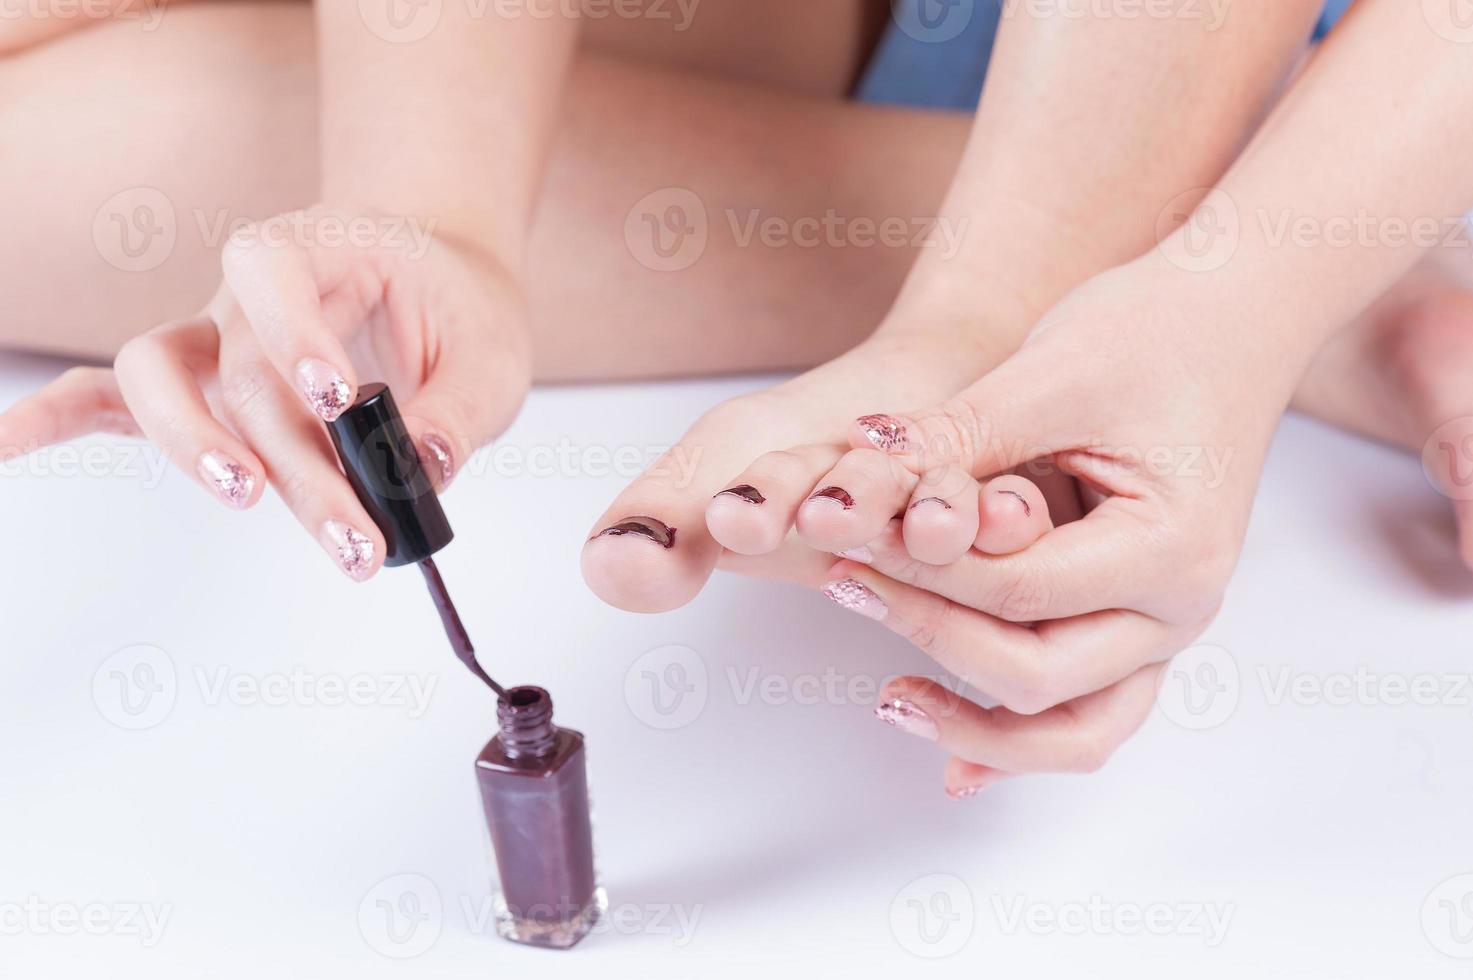 toenail paint photo